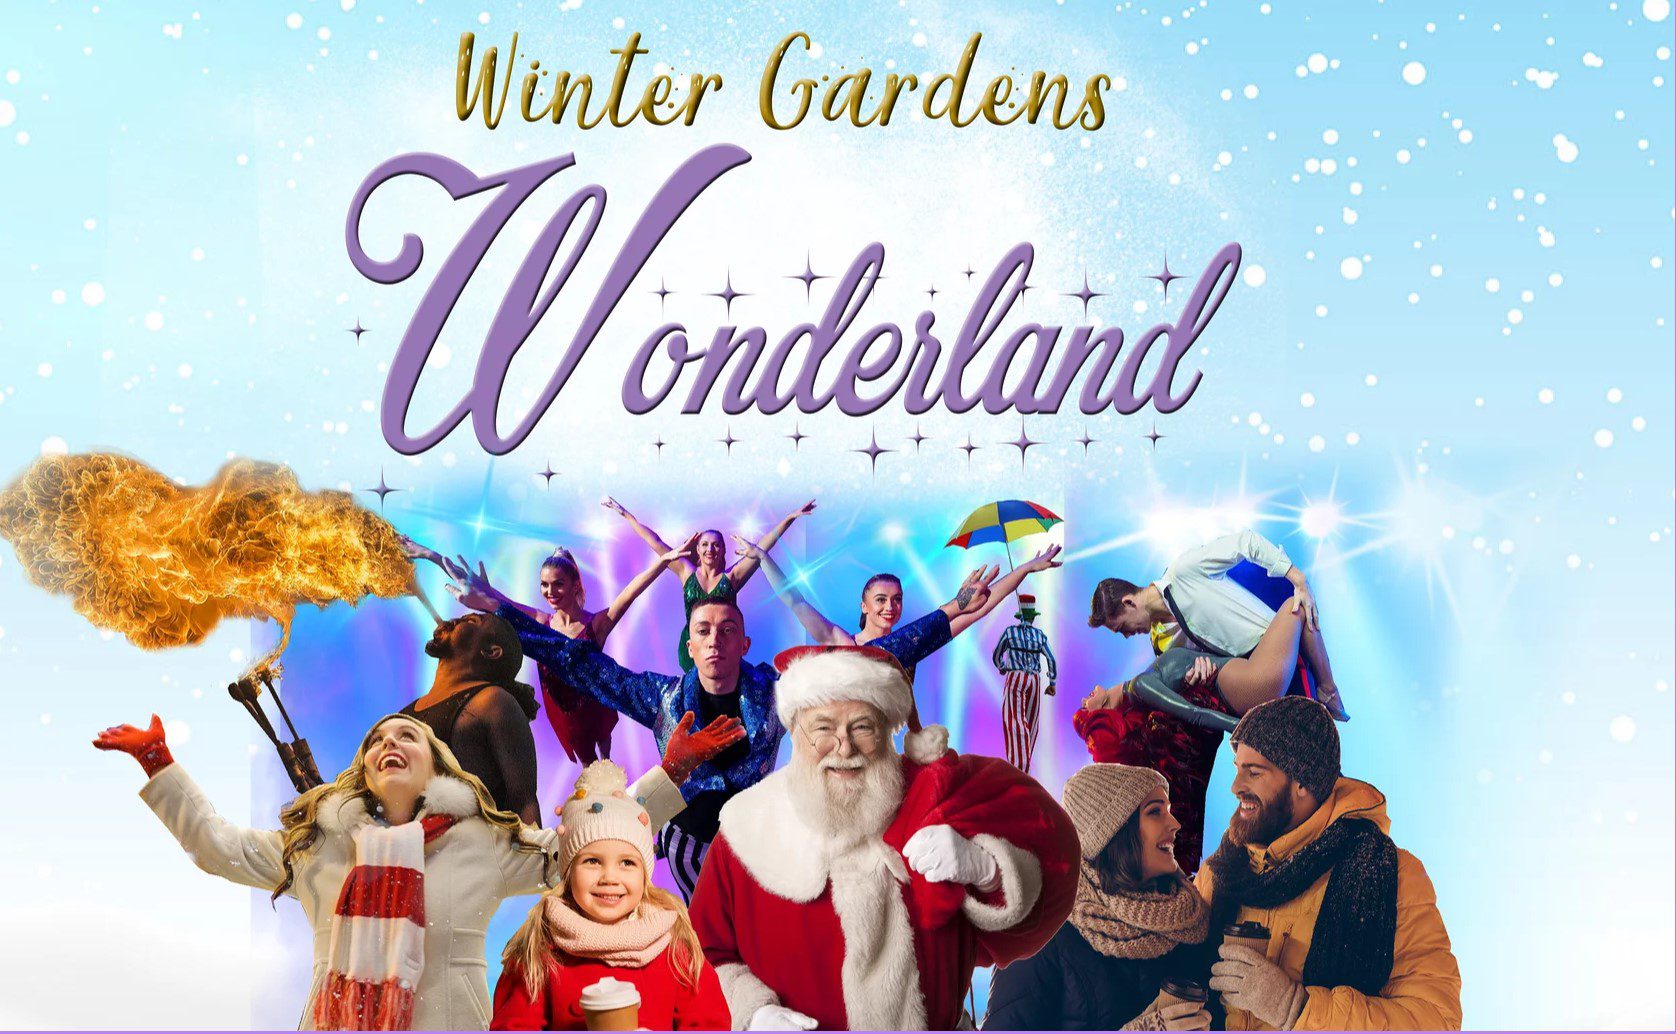 Winter Gardens Christmas Markets Wonderland!